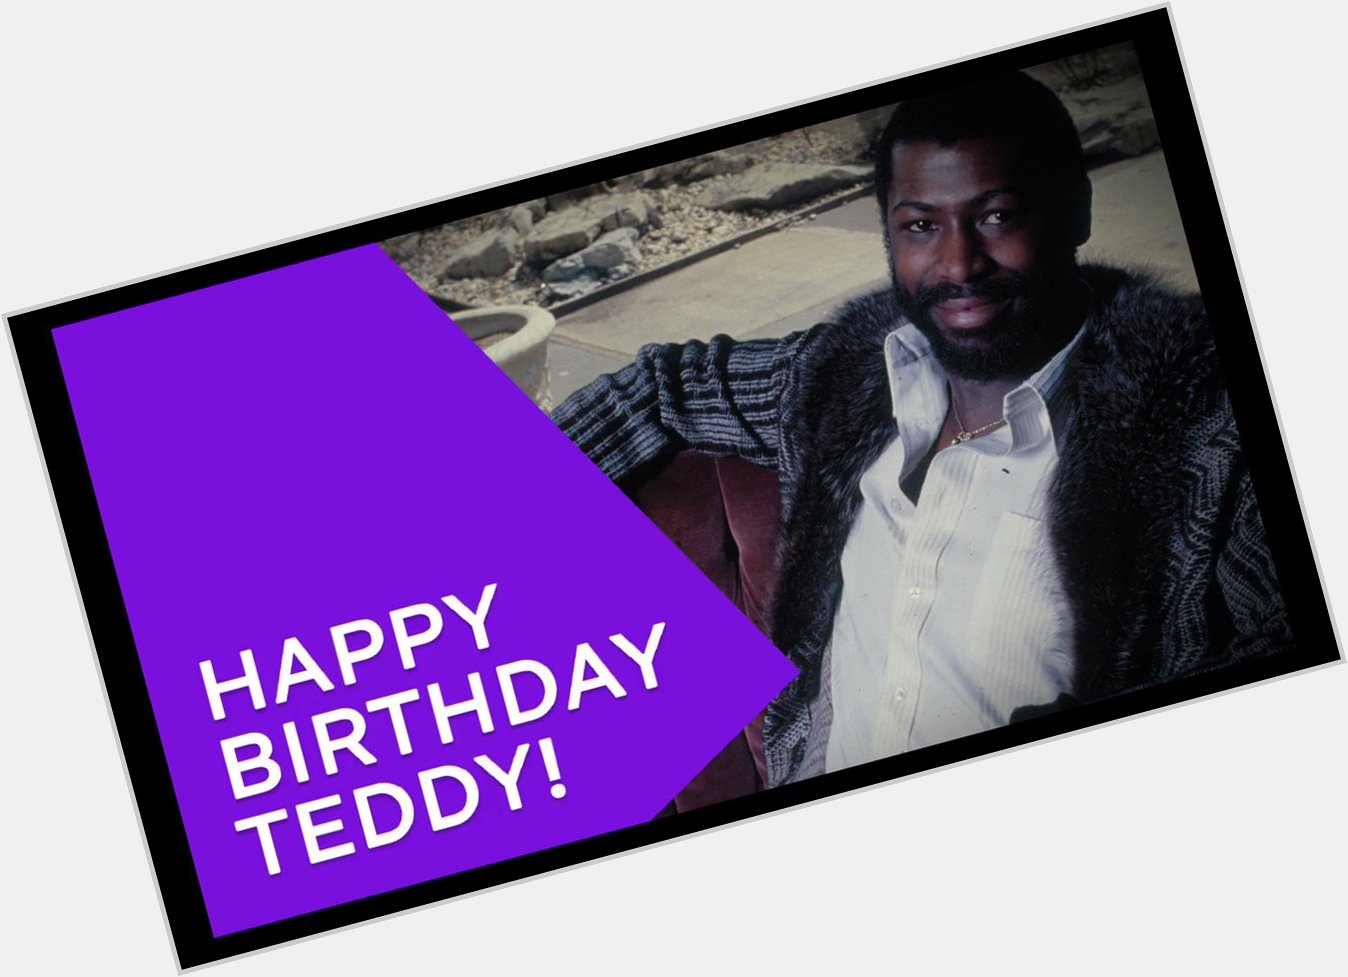 Happy Birthday Teddy Pendergrass!
Stream his Essential playlist on 